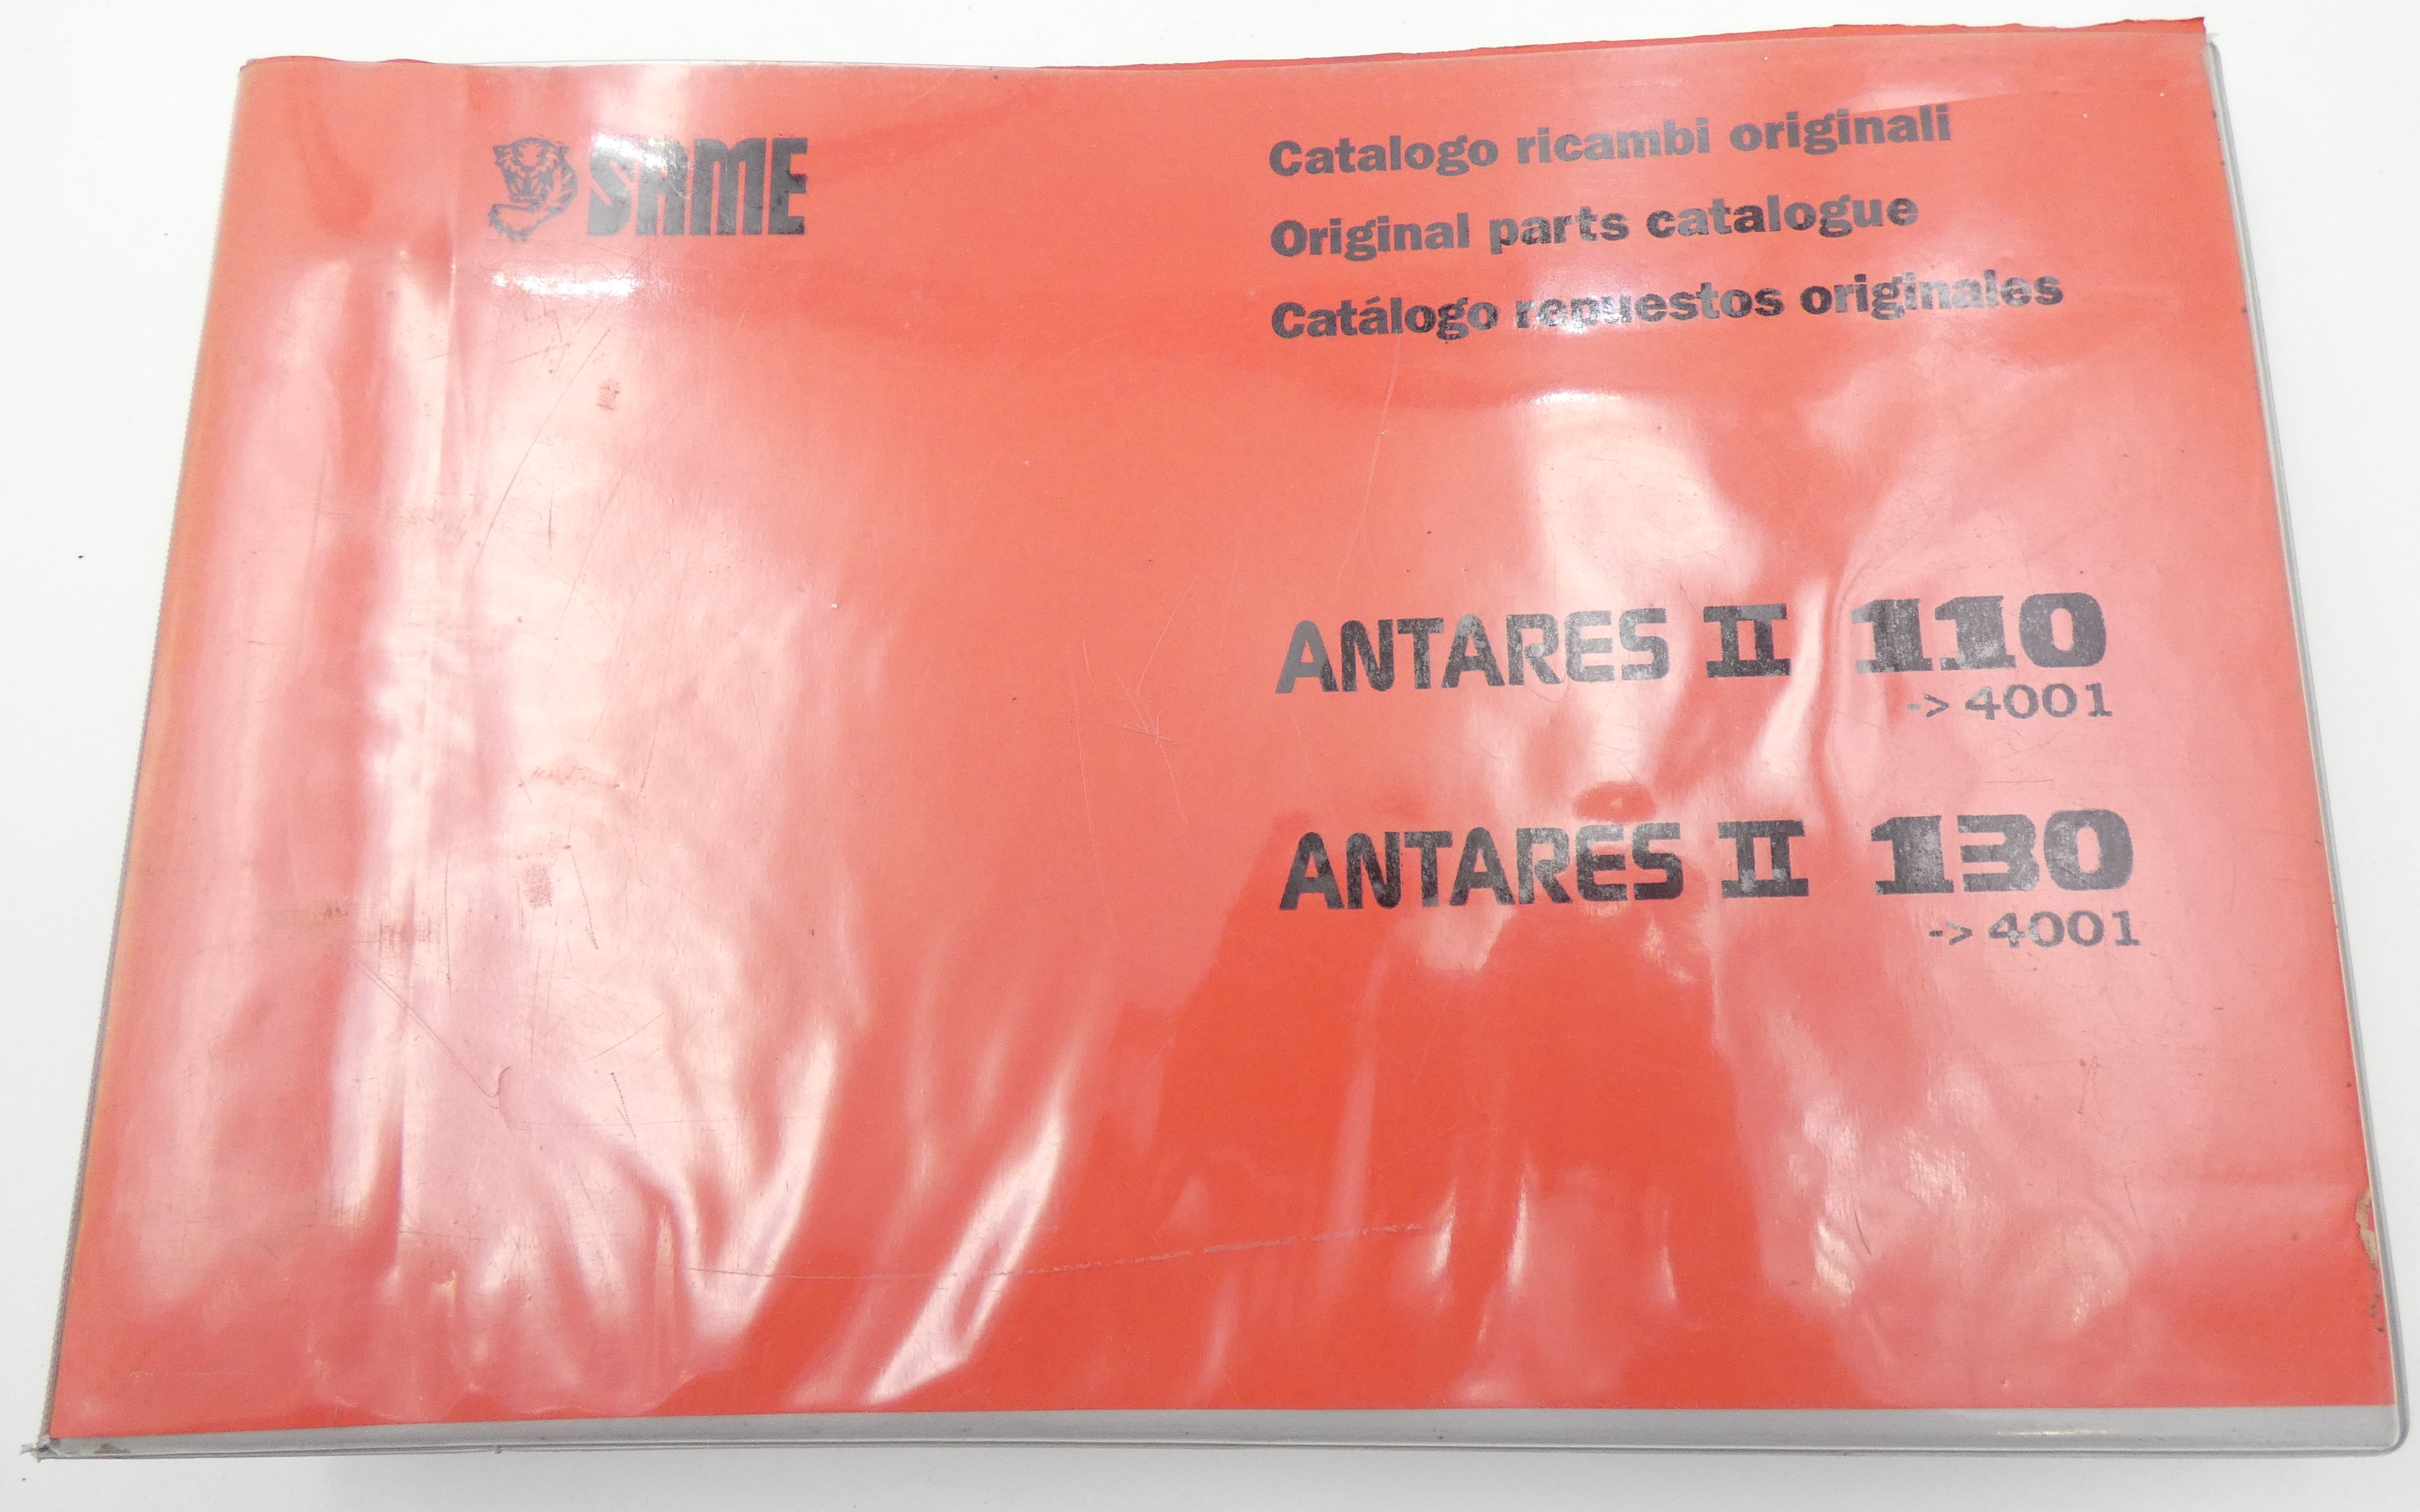 Same Antares II 110 and 130 original parts catalogue